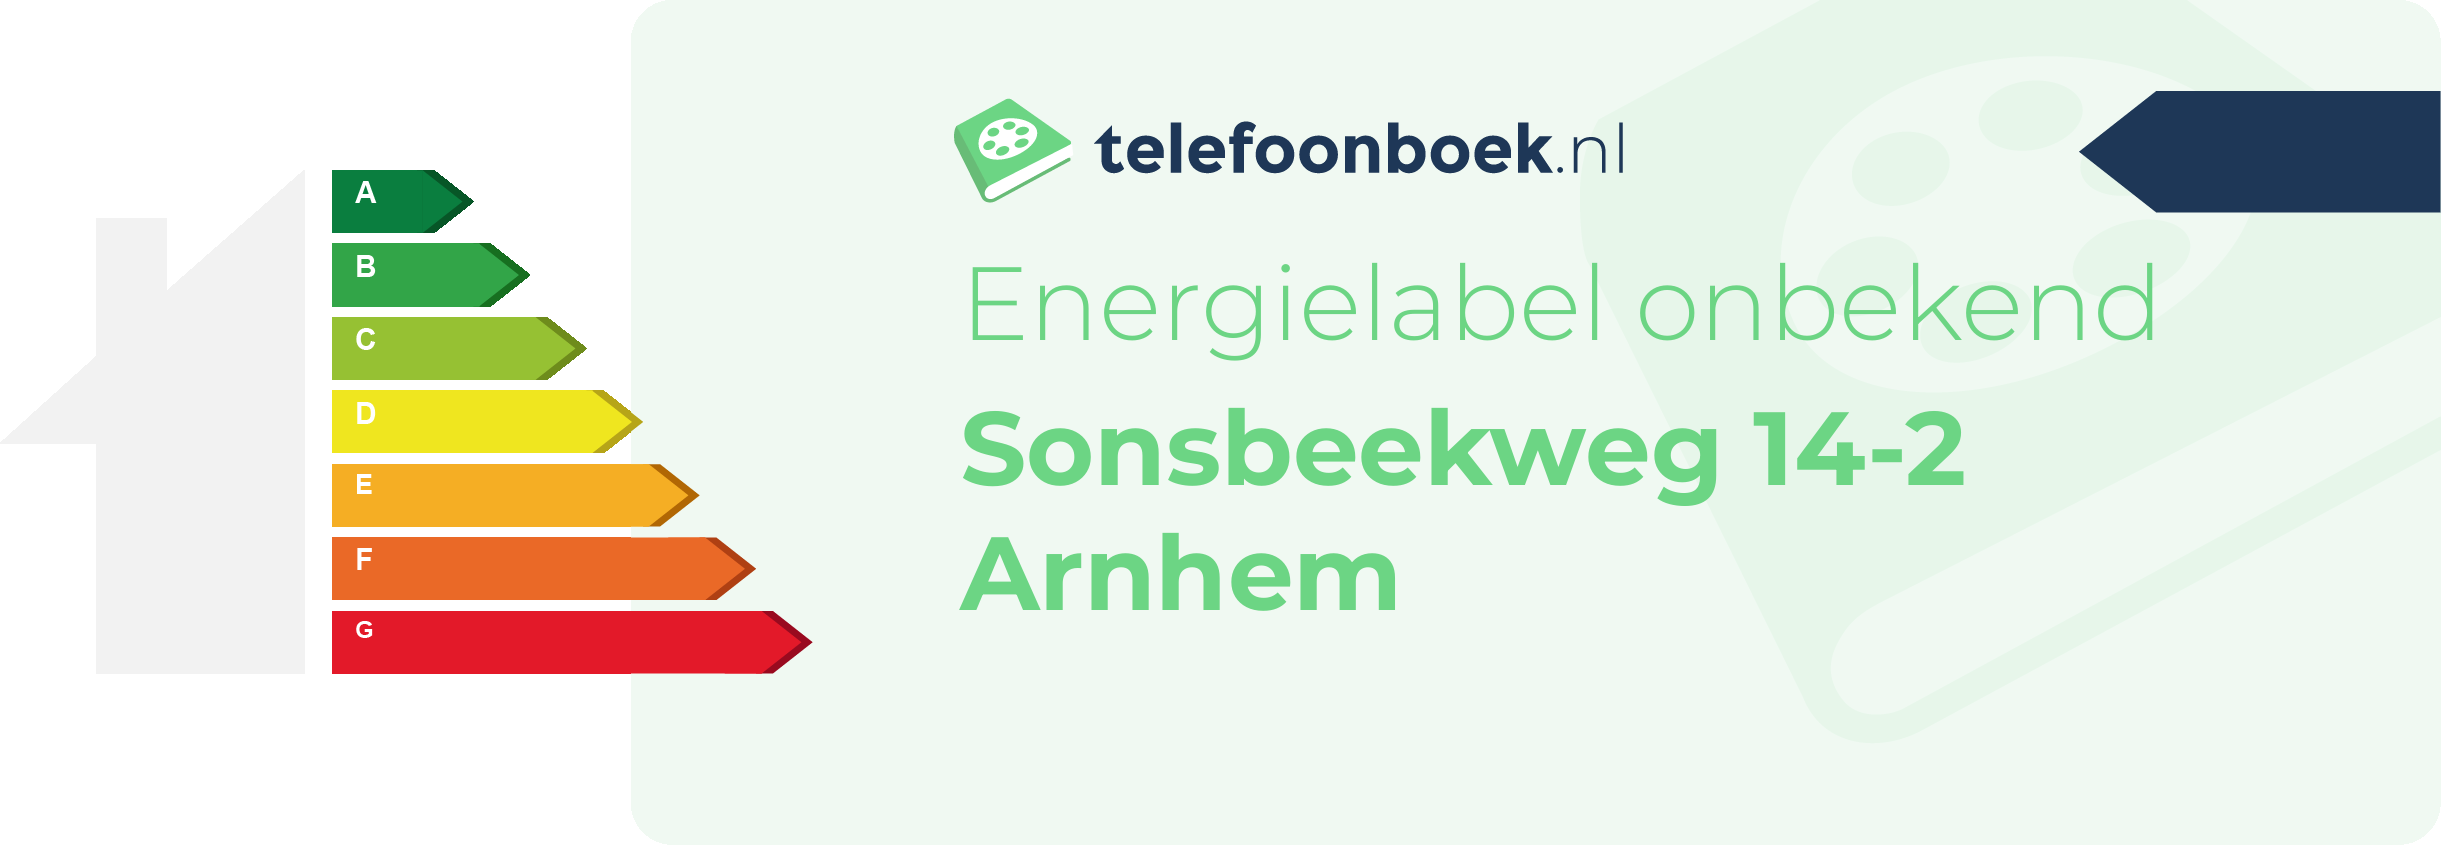 Energielabel Sonsbeekweg 14-2 Arnhem